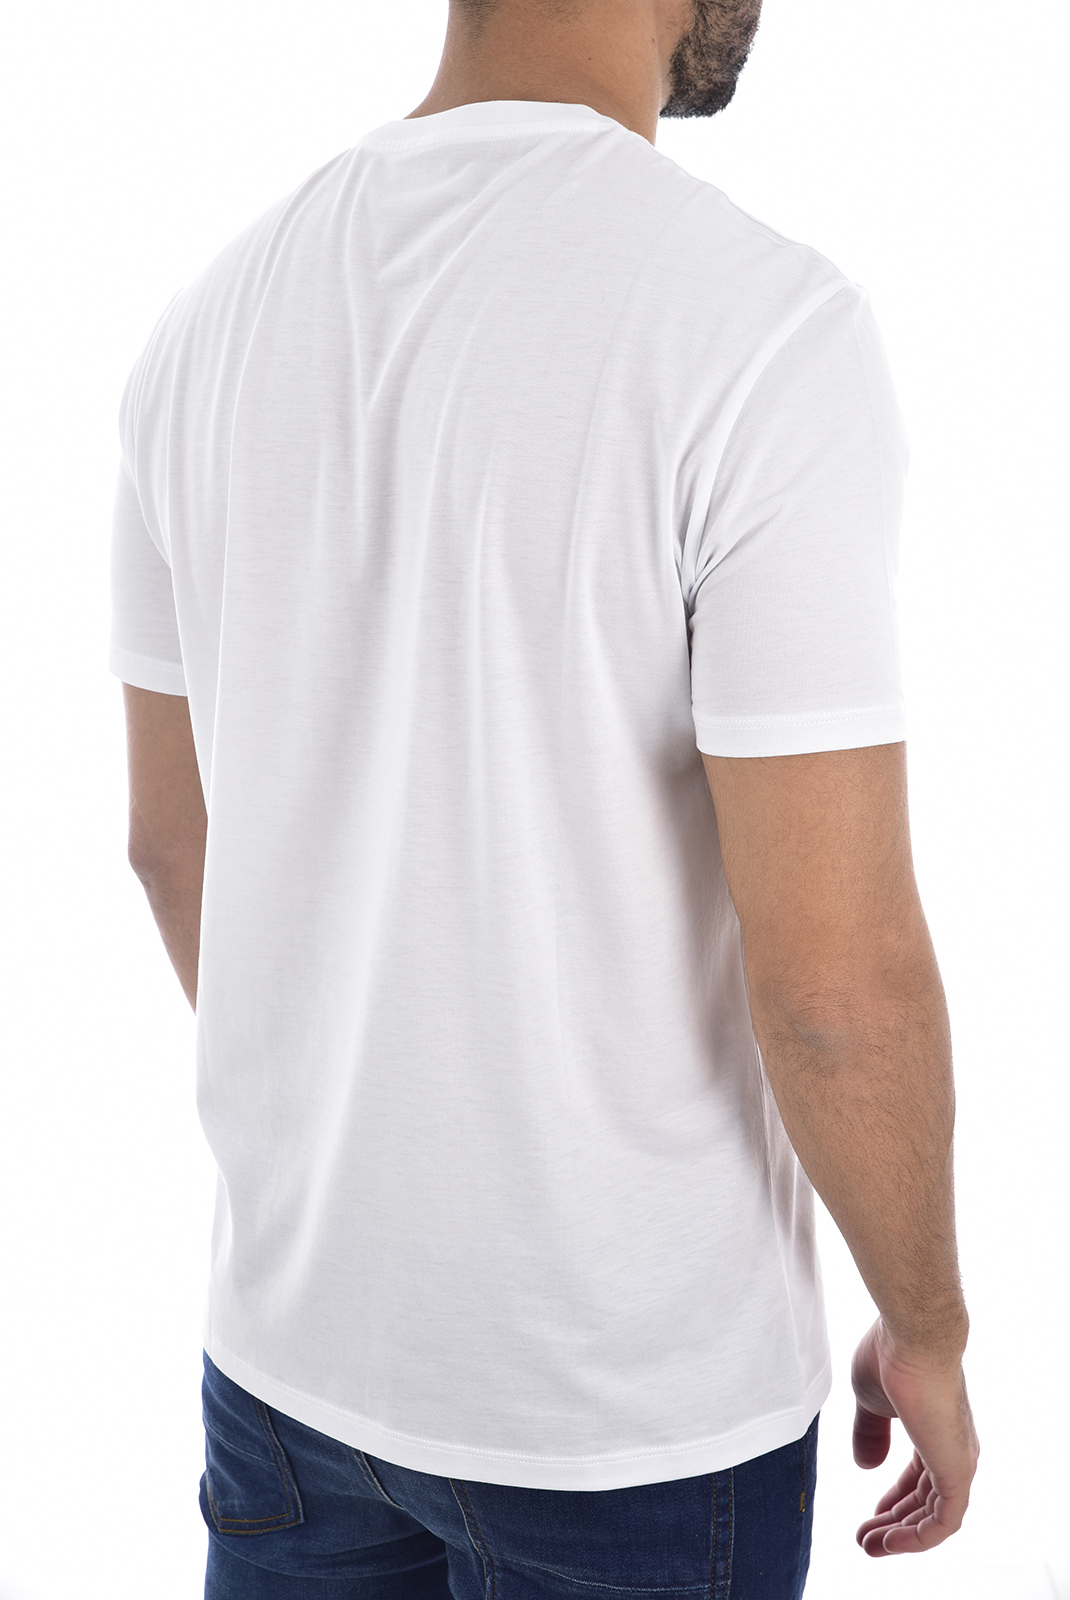 Emporio Armani Tee-shirt Blanc À Manches Courtes 6gztau Zja5z